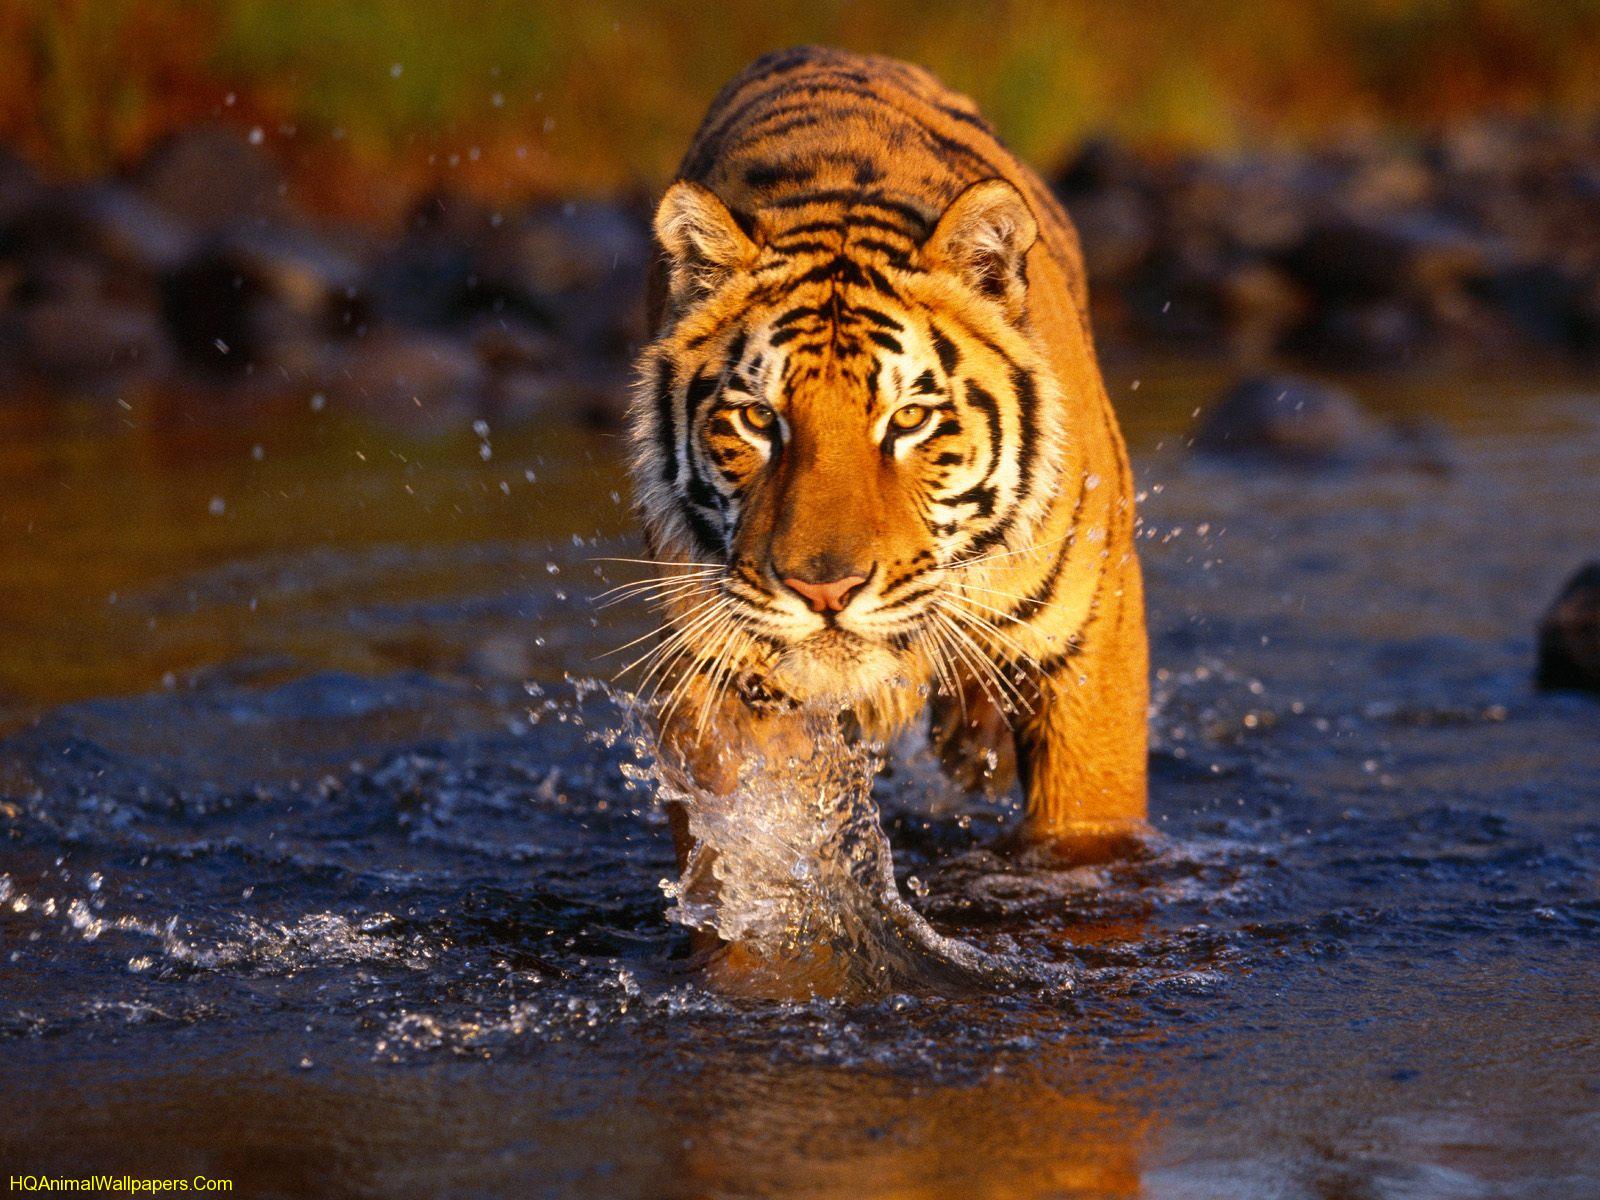 https://blogger.googleusercontent.com/img/b/R29vZ2xl/AVvXsEiKZMSYUfXX85tamAbBl5LMZB_DRWHgfe0MmPew5KEs55aeFQOTlZCMvS3WpsHUSbOzWtD4eDESoshXuYLto8Vm0mf9DBPgob1OT0bwkGnFb2AUgGfokFR7XO9iFfzPgEYtuHcCHm0cvvc/s1600/wallpaper-tigre-Bengal.jpg